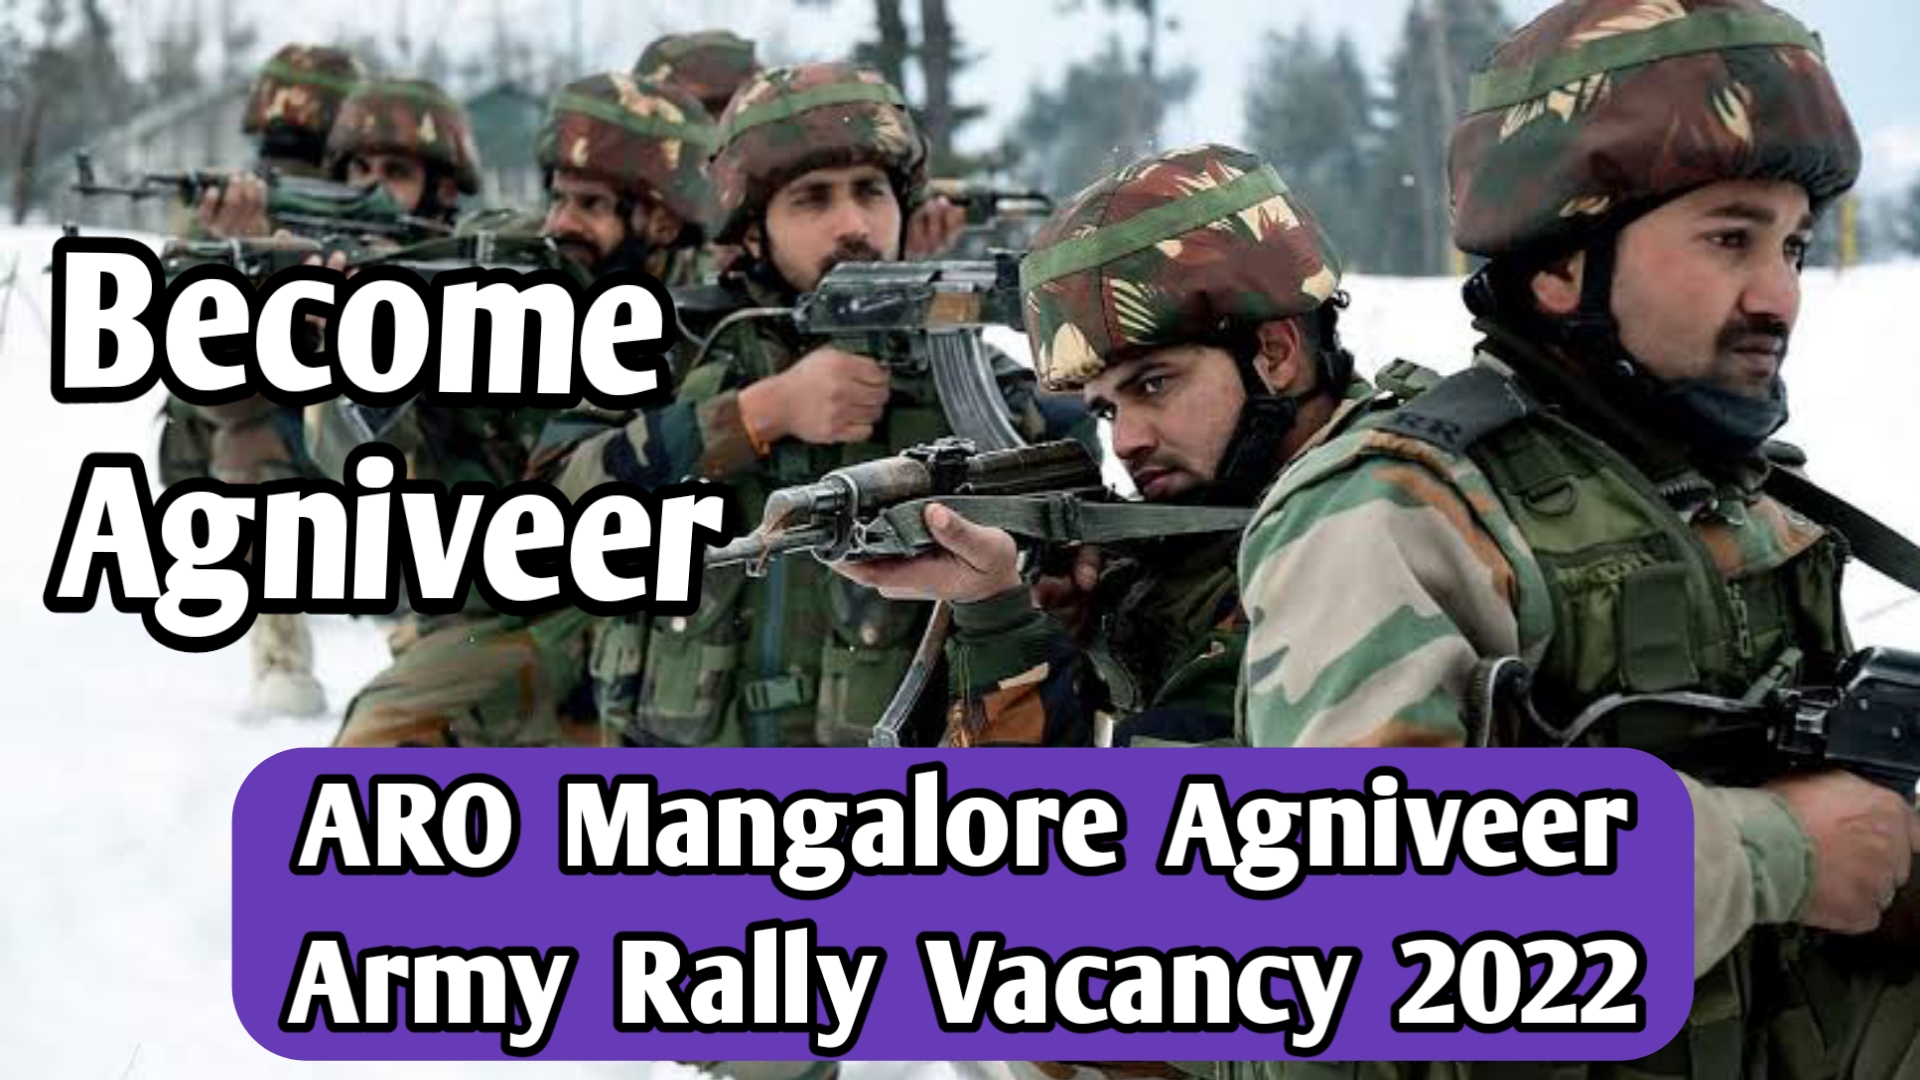 ARO Mangalore Agniveer Army Rally Vacancy 2022.jpg